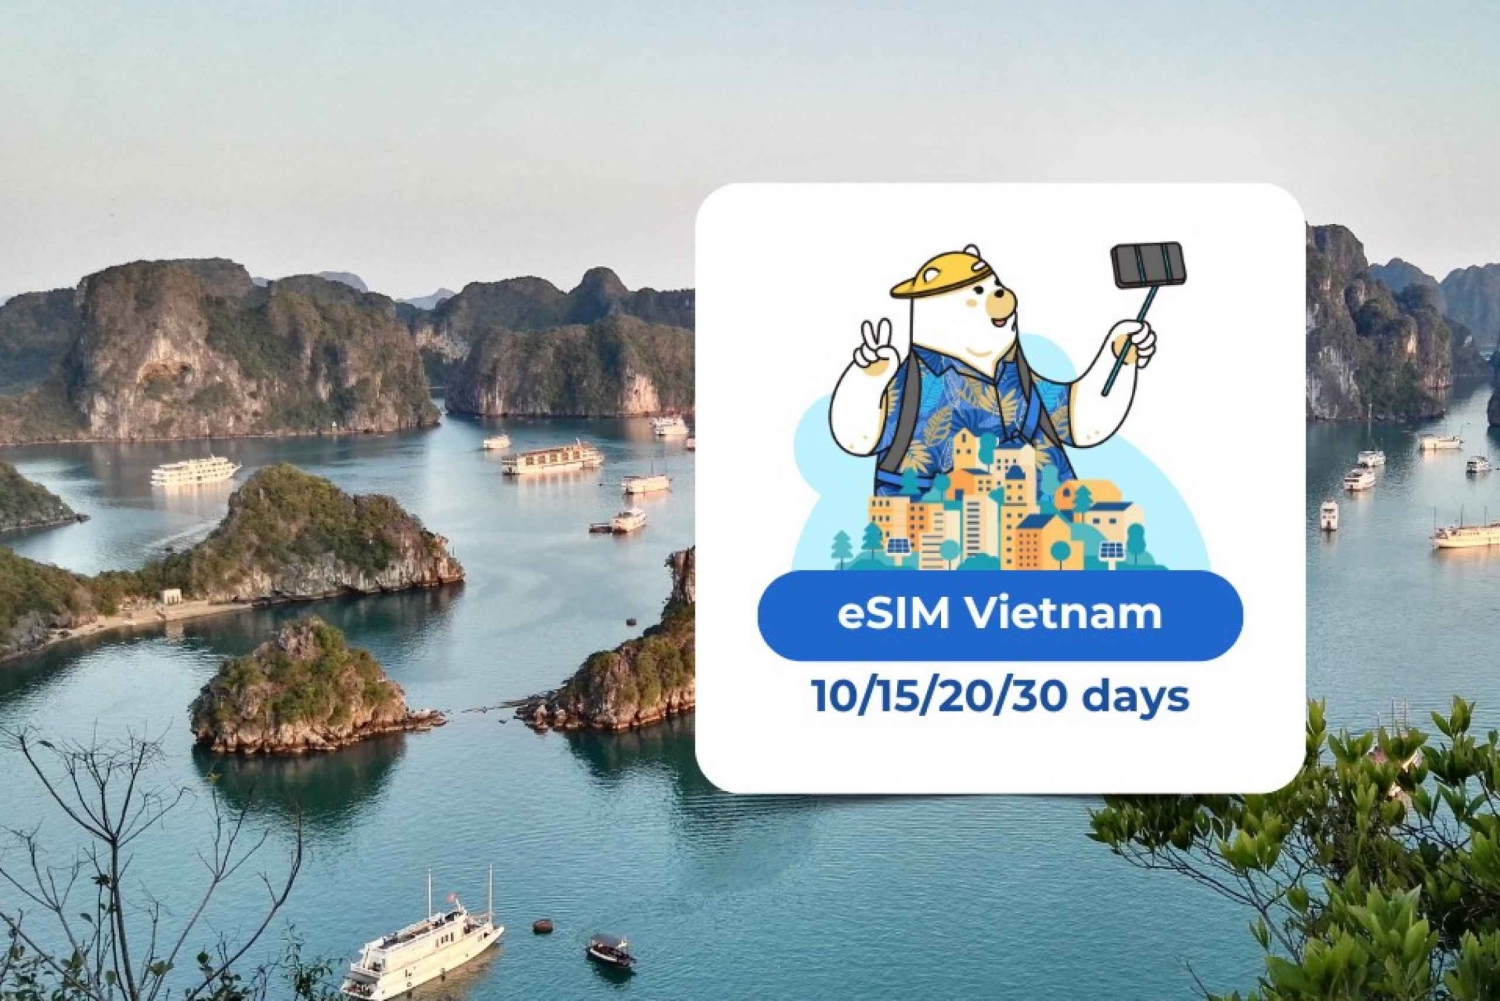 Vietnam eSIM: Roaming mobil dataplan 10/15/20/30 dagar